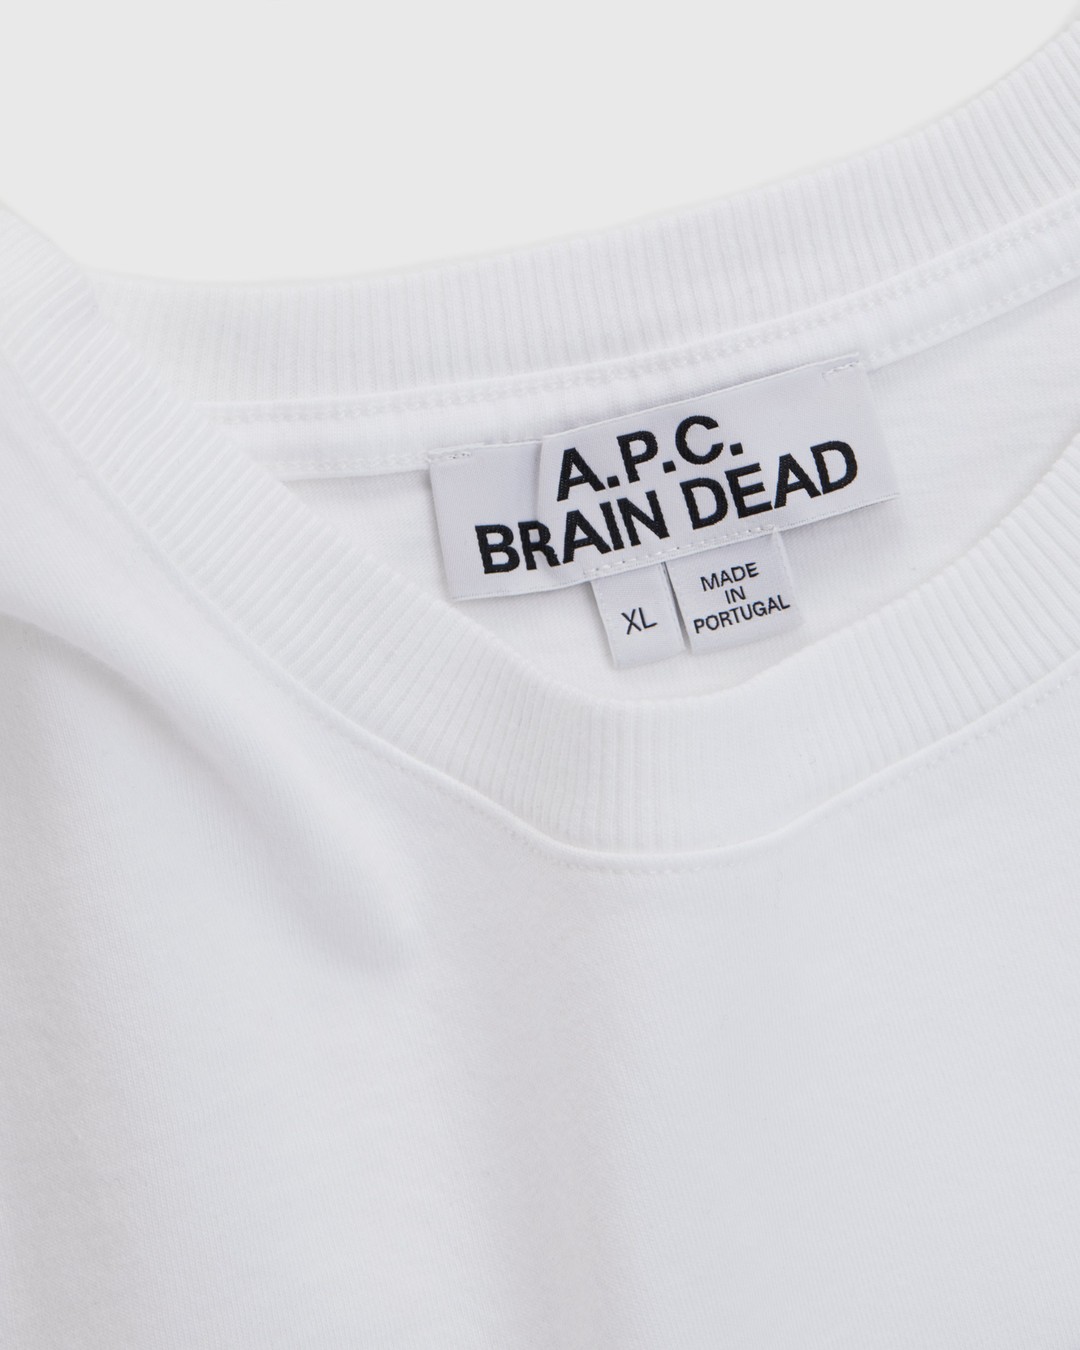 Brain Dead x A.P.C. – Spooky White | Highsnobiety Shop